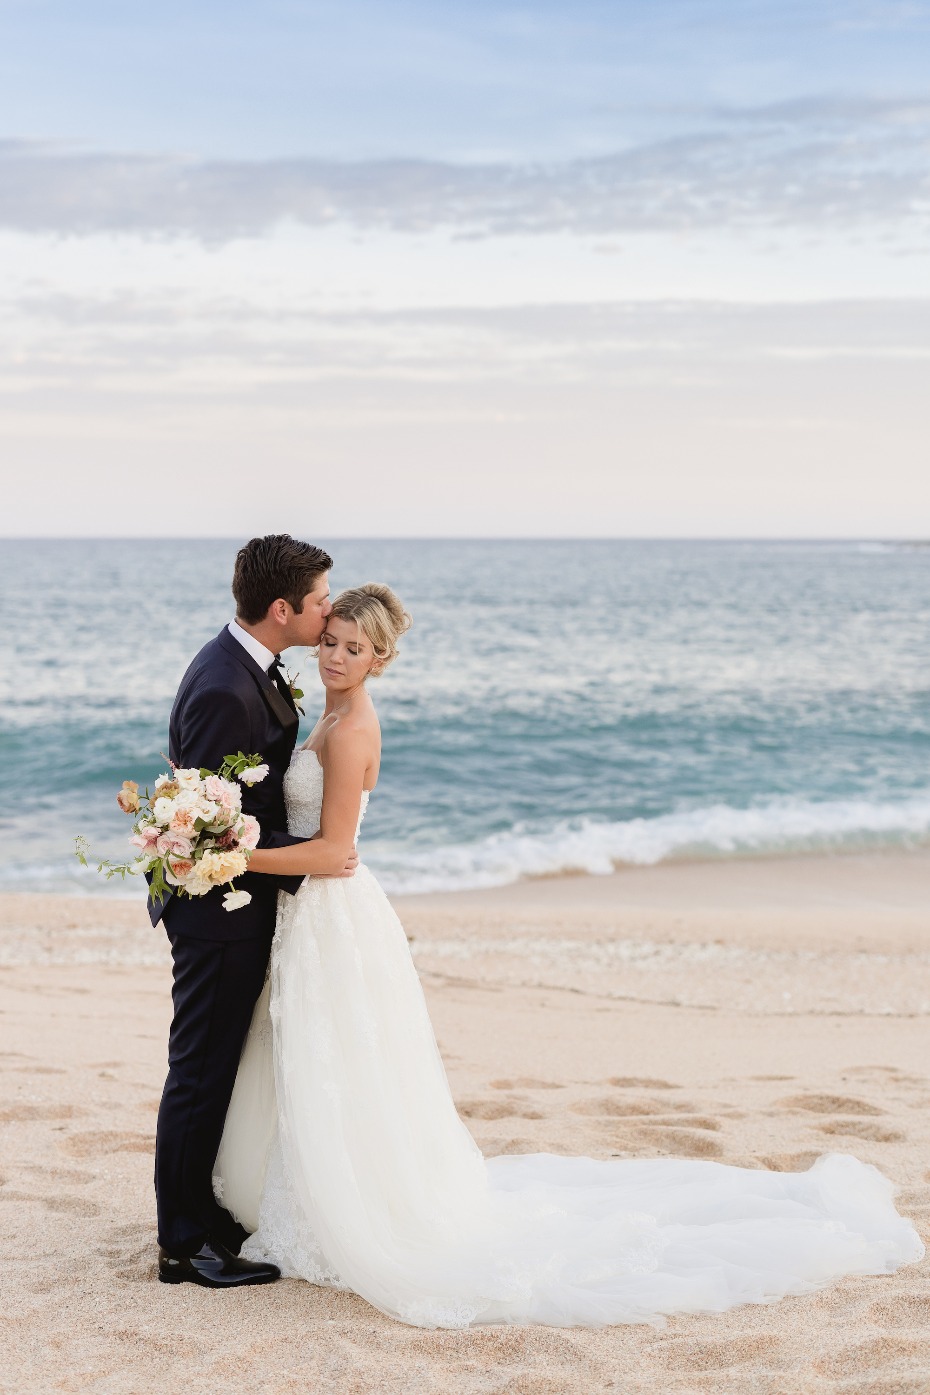 Dreamy beach wedding in Mexico